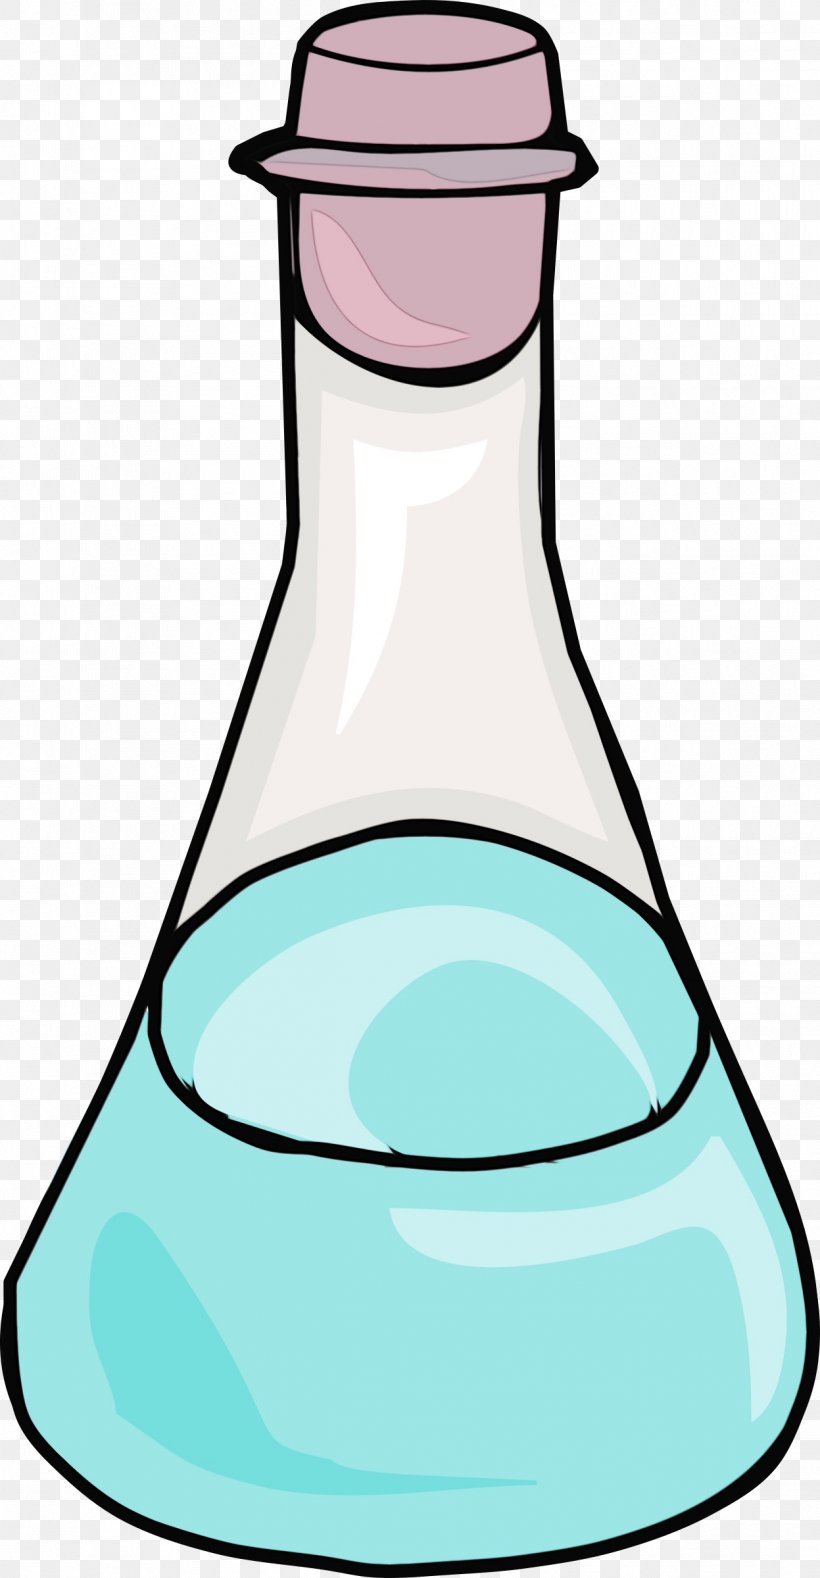 Clip Art Laboratory Flask Bottle Flask Laboratory Equipment, PNG, 1247x2400px, Watercolor, Bottle, Flask, Laboratory Equipment, Laboratory Flask Download Free